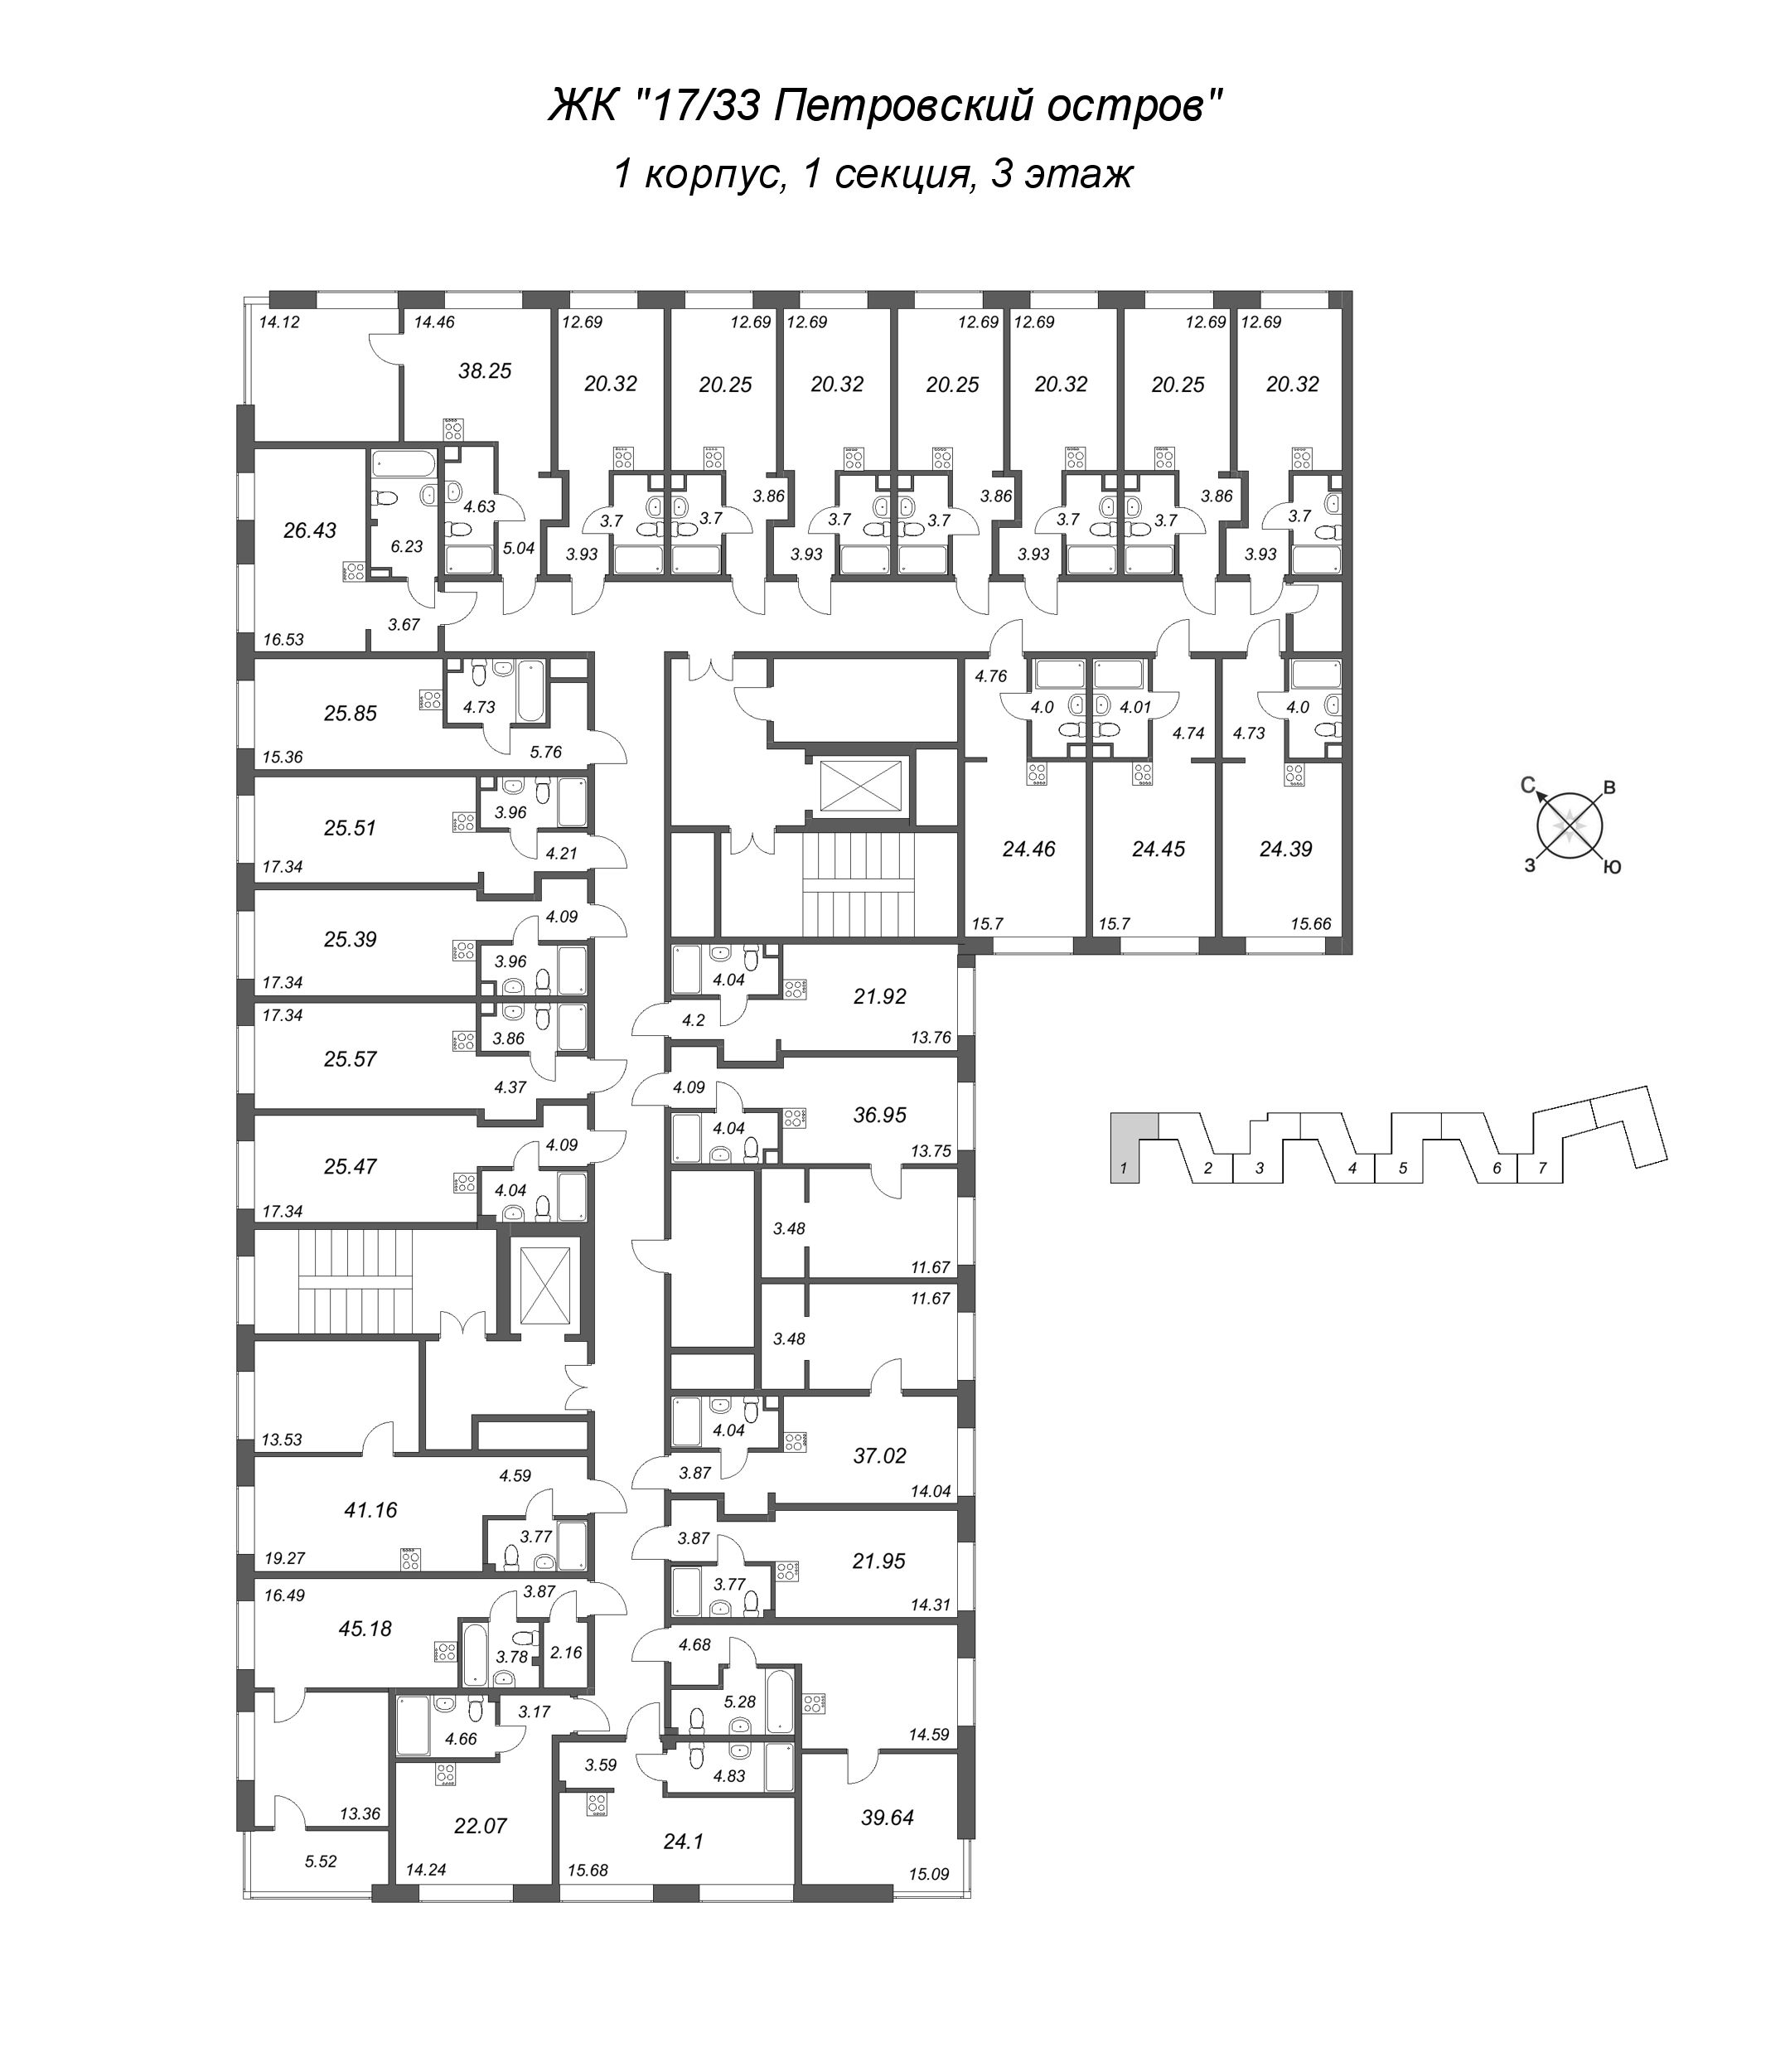 2-комнатная (Евро) квартира, 41.16 м² - планировка этажа